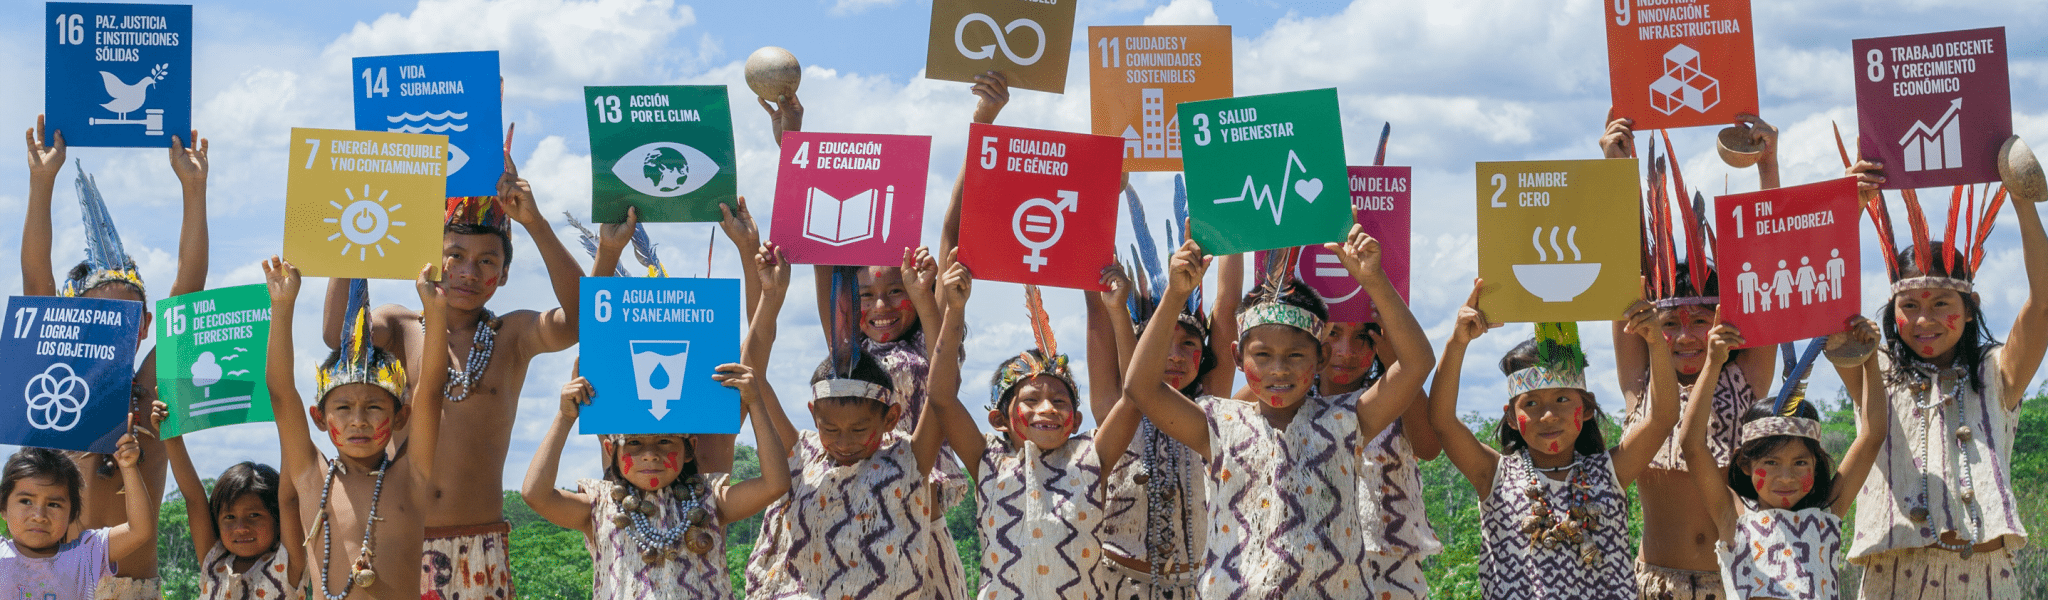 The Sustainable Development Agenda - United Nations Sustainable Development